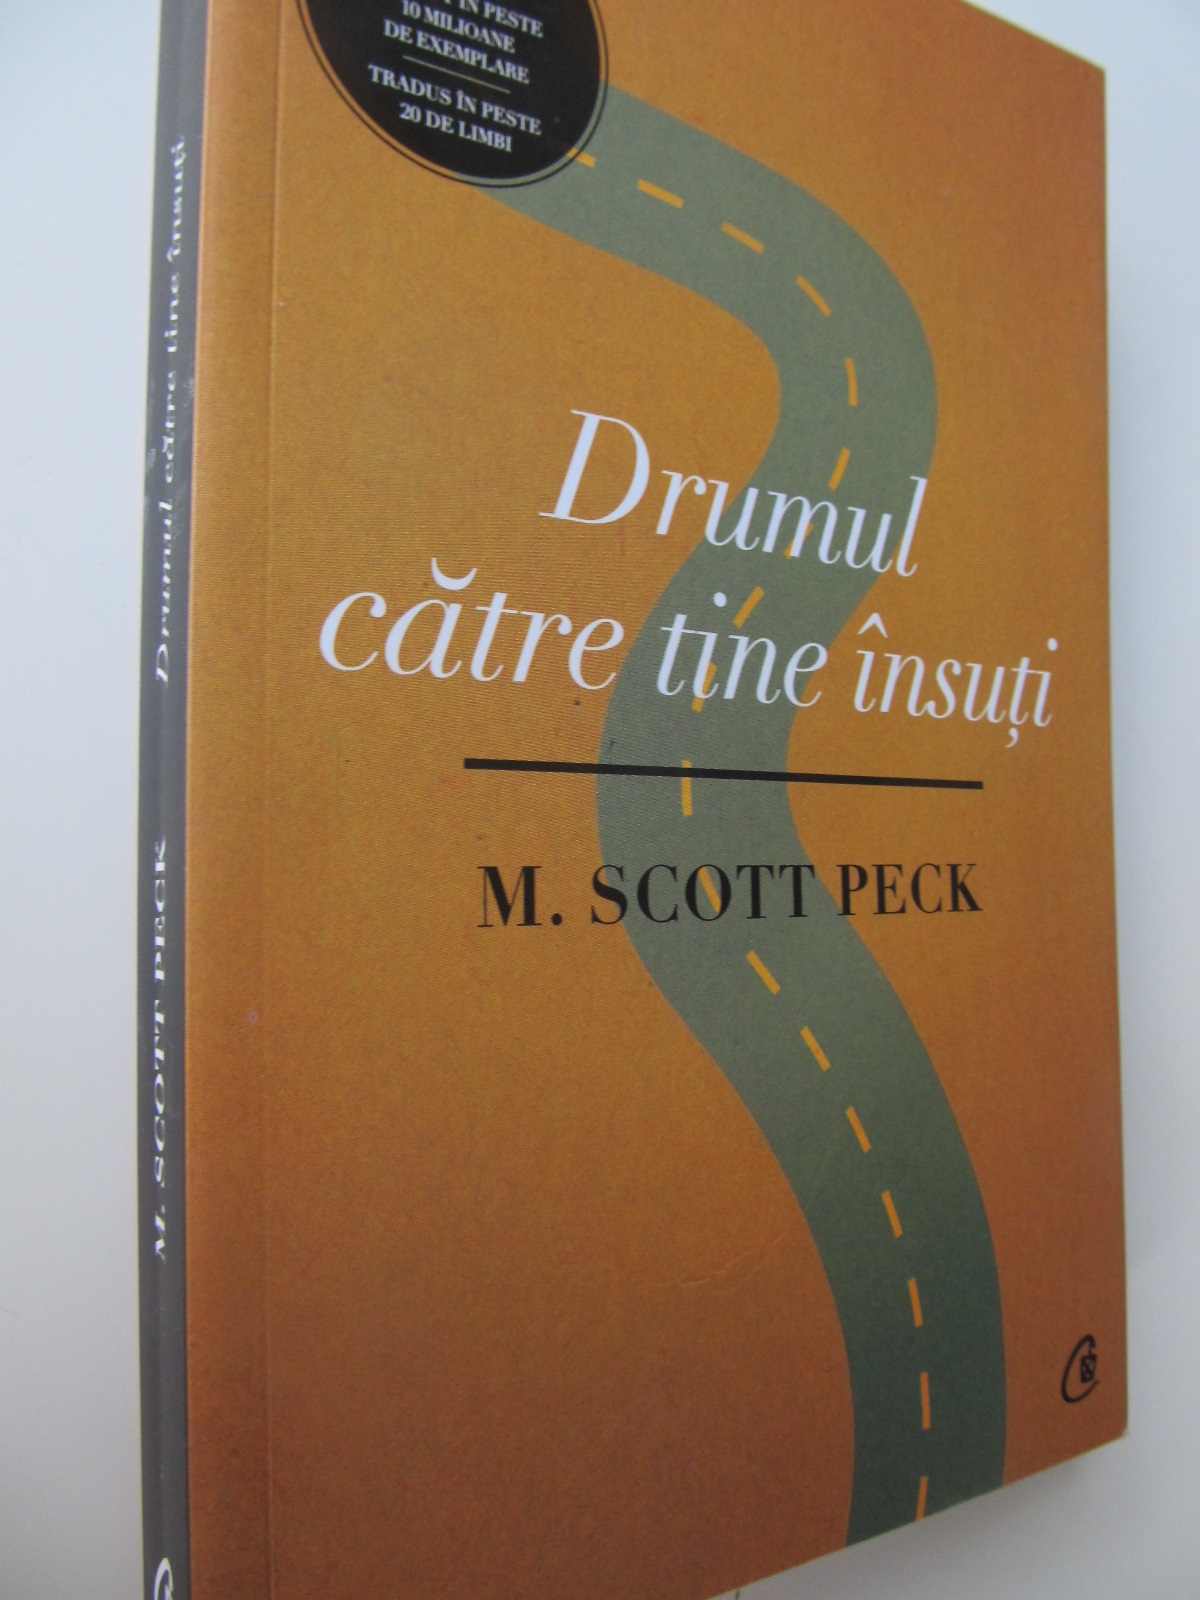 Drumul catre tine insuti - M. Scott Peck | Detalii carte